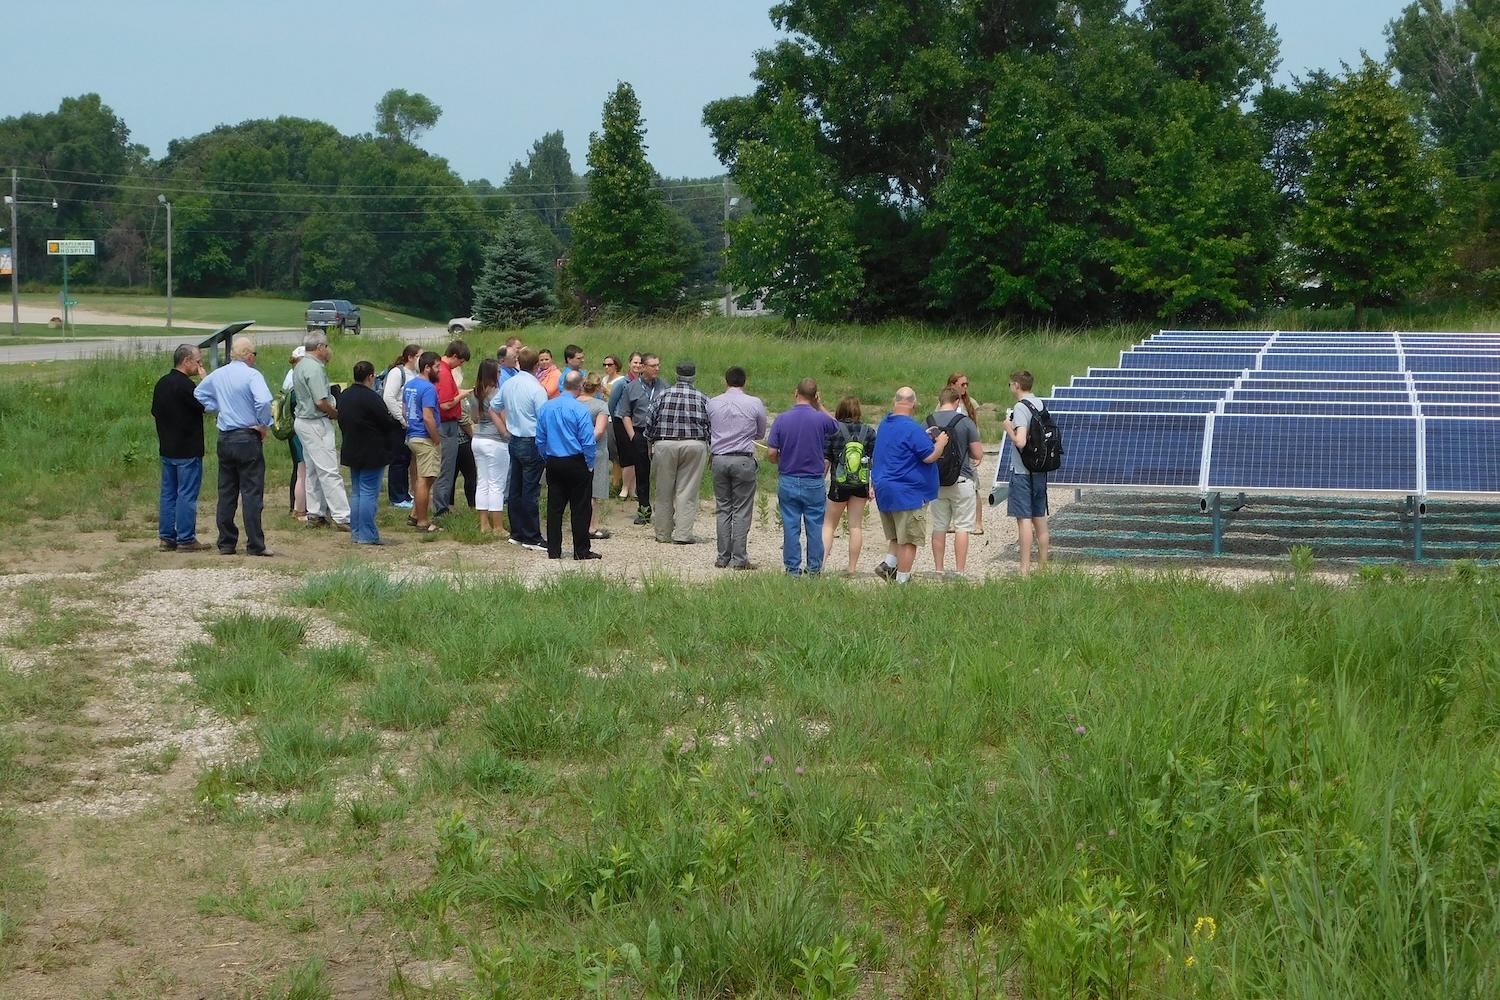 tour of a community solar farm in minnesota